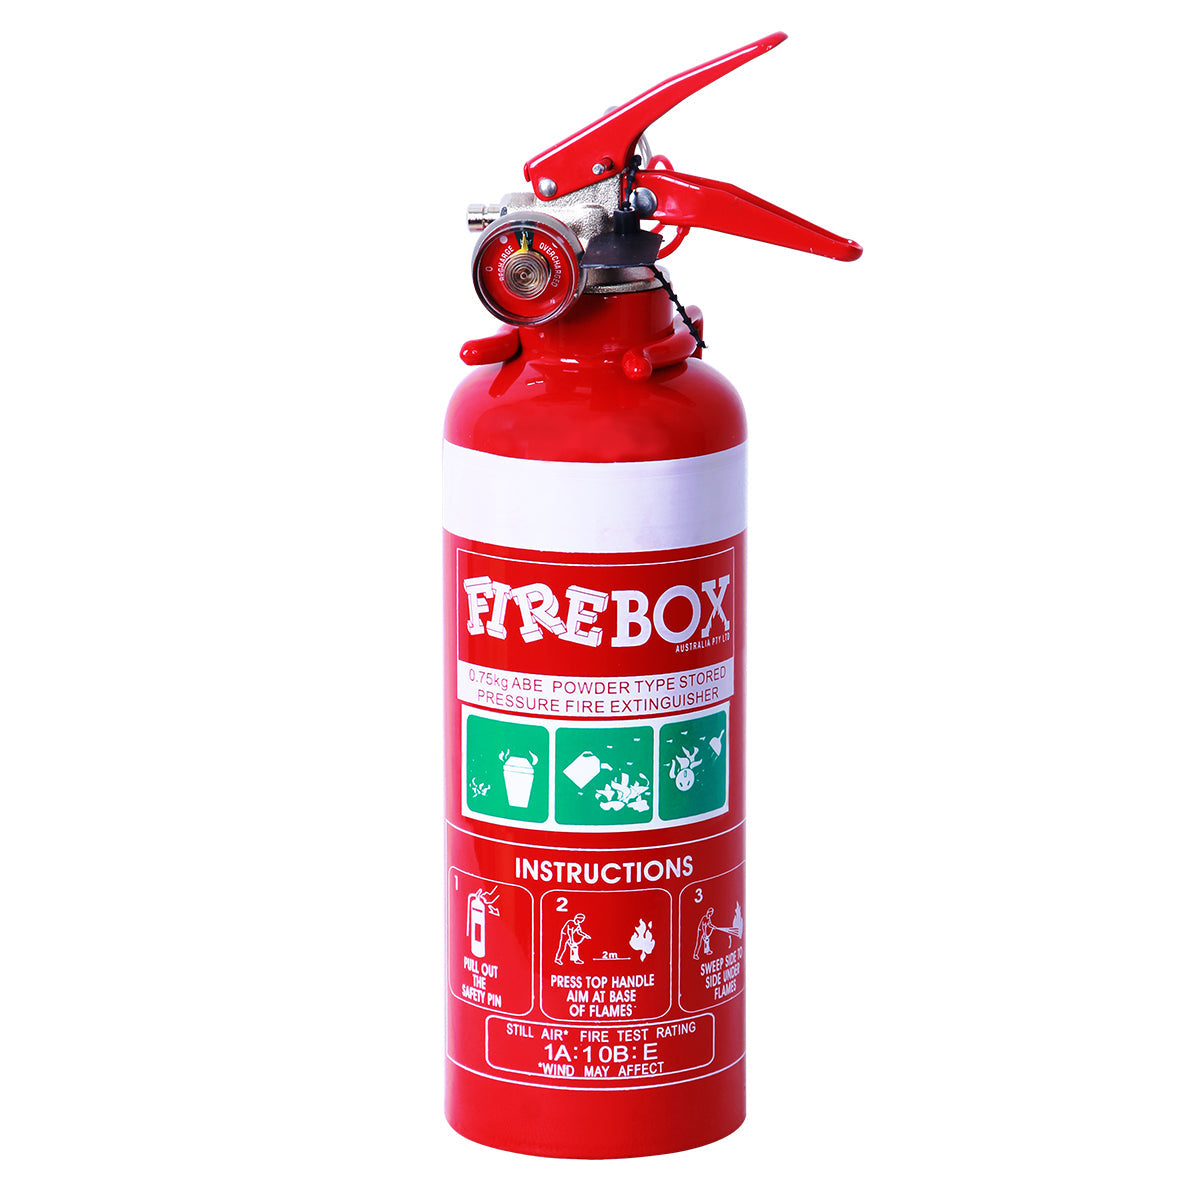 0.75kg Dry Chemical Powder Extinguisher - Premium ABE Extinguishers from Firebox - Shop now at Firebox Australia